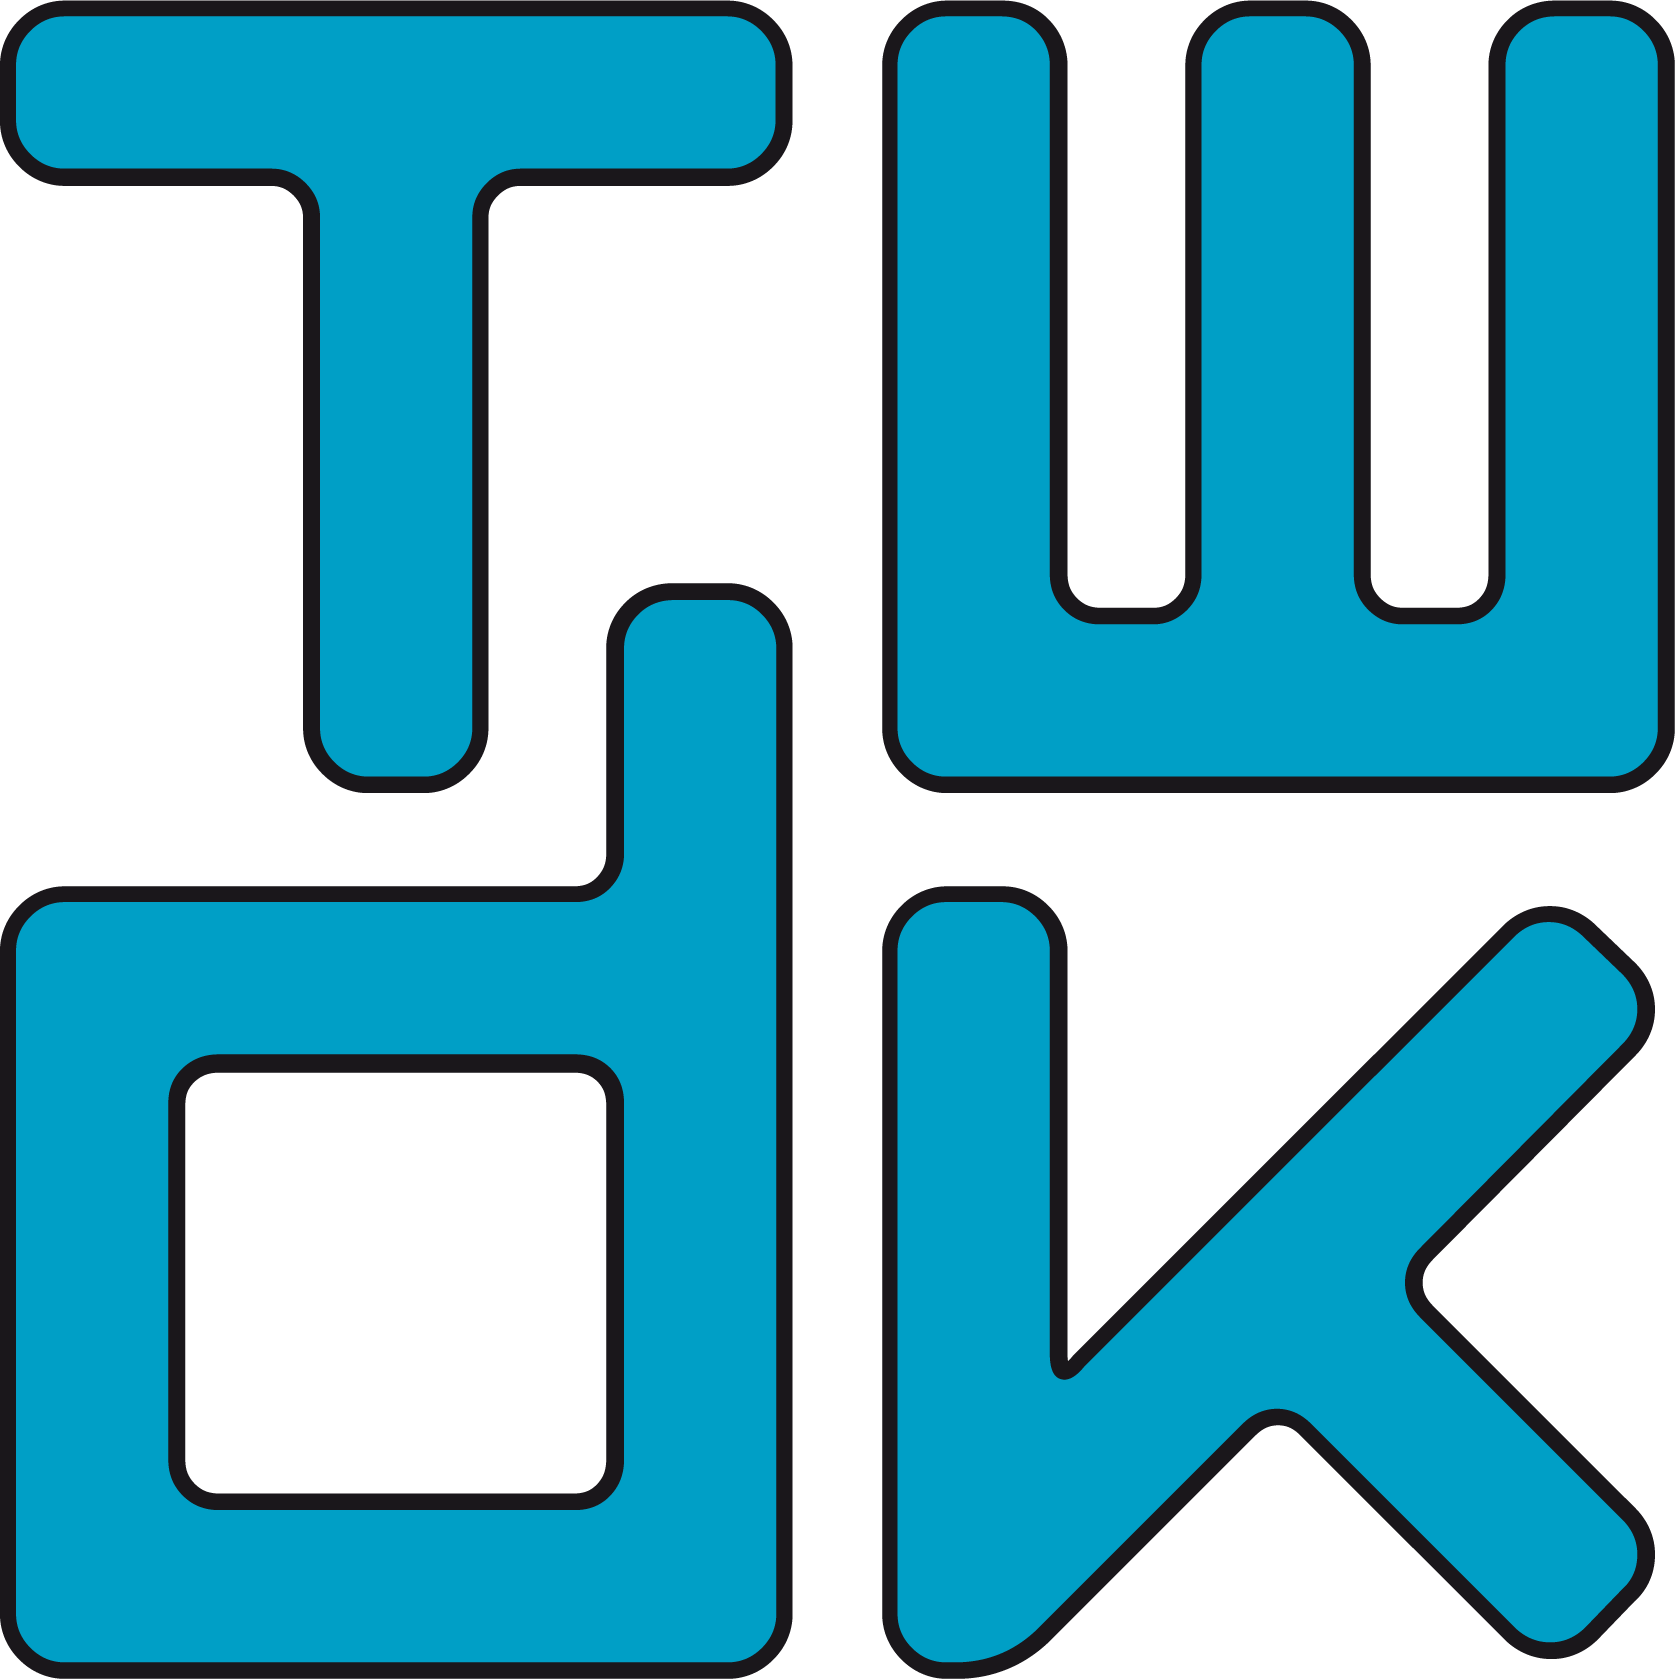 TWDK square logo